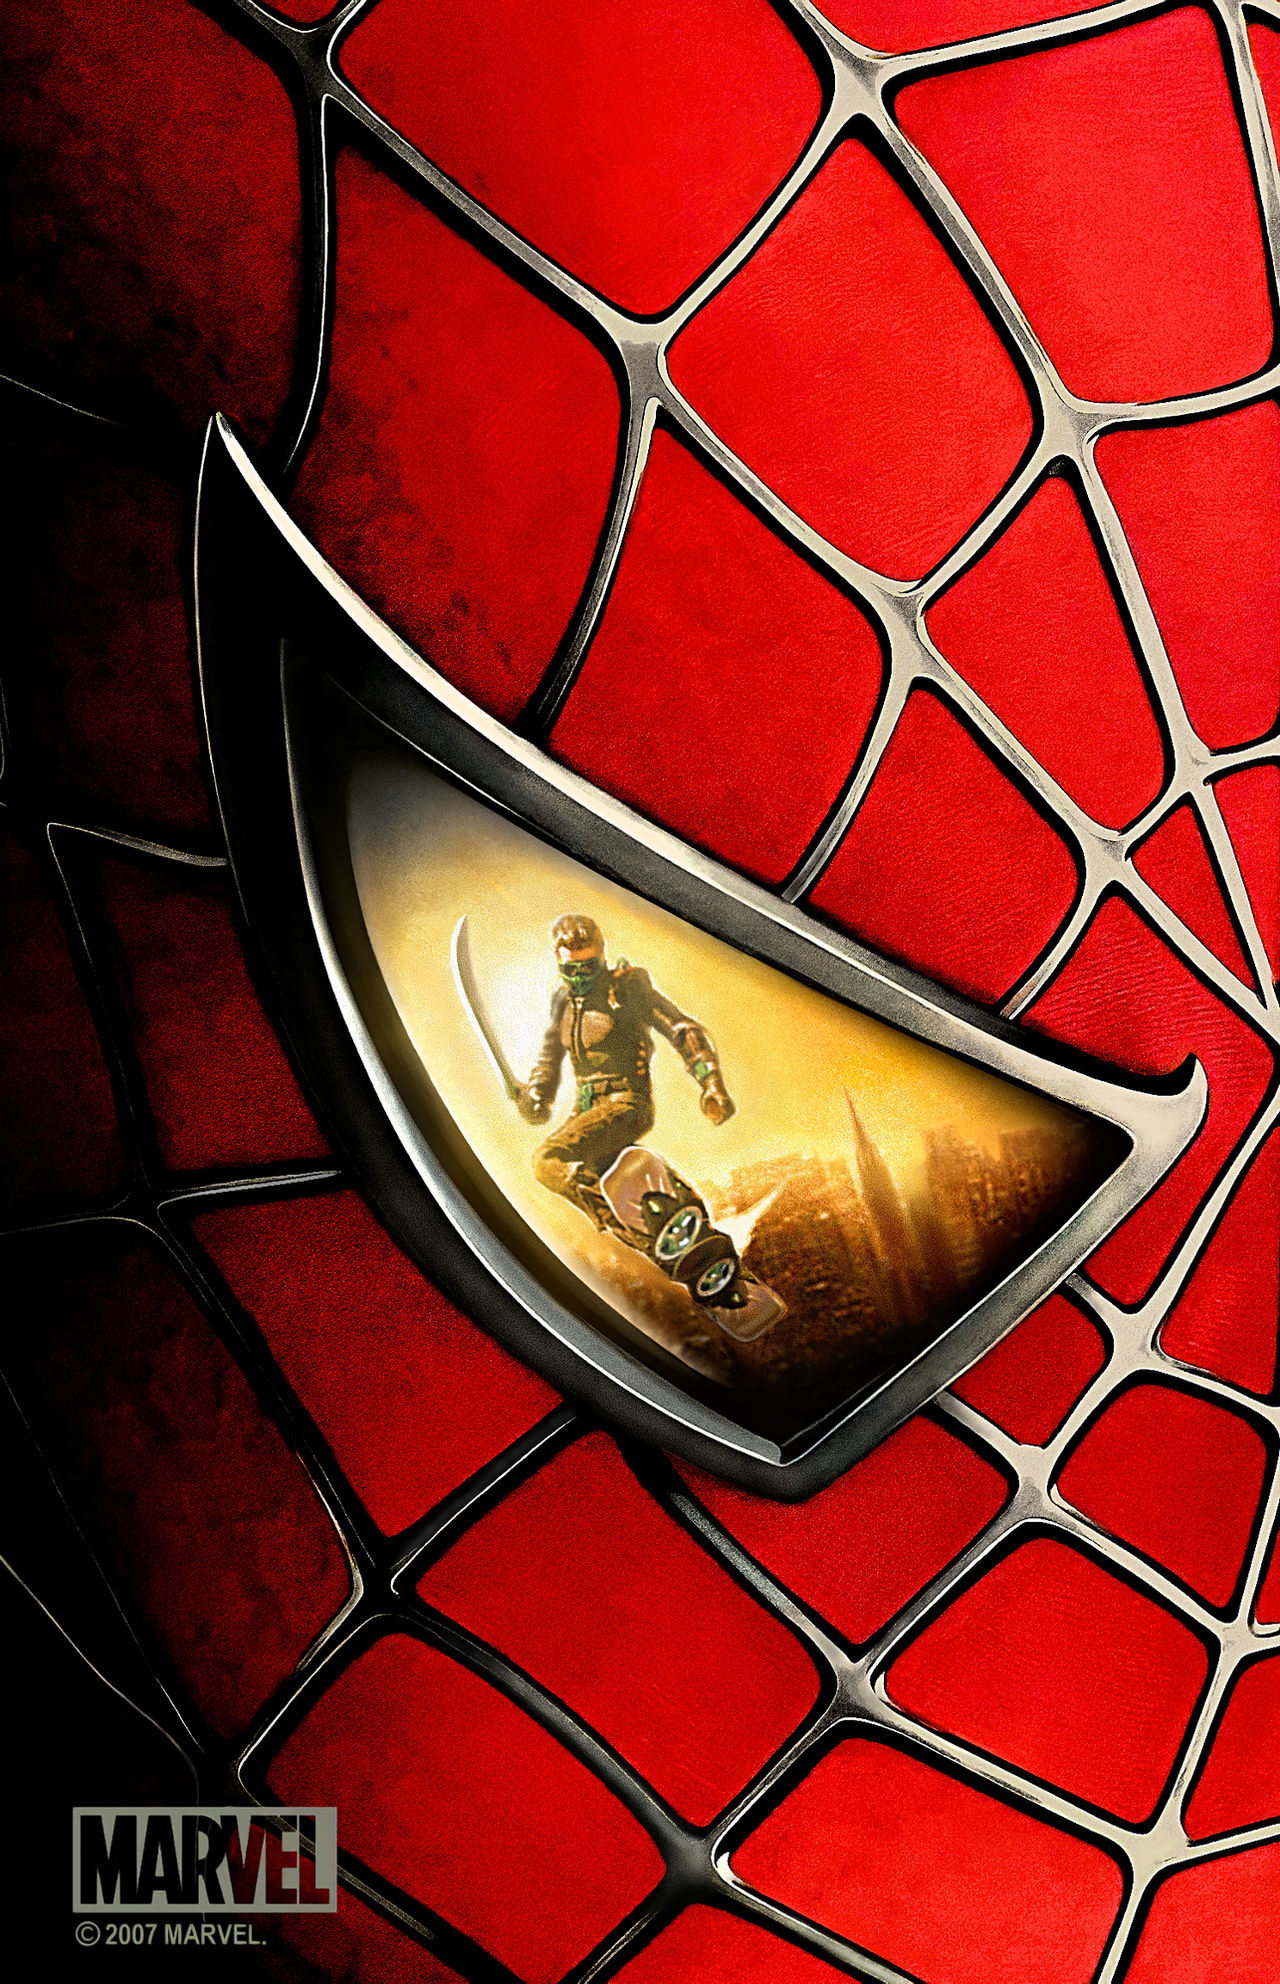 Spider-Man 3 (2007) Alternative Poster by Talleeco on DeviantArt